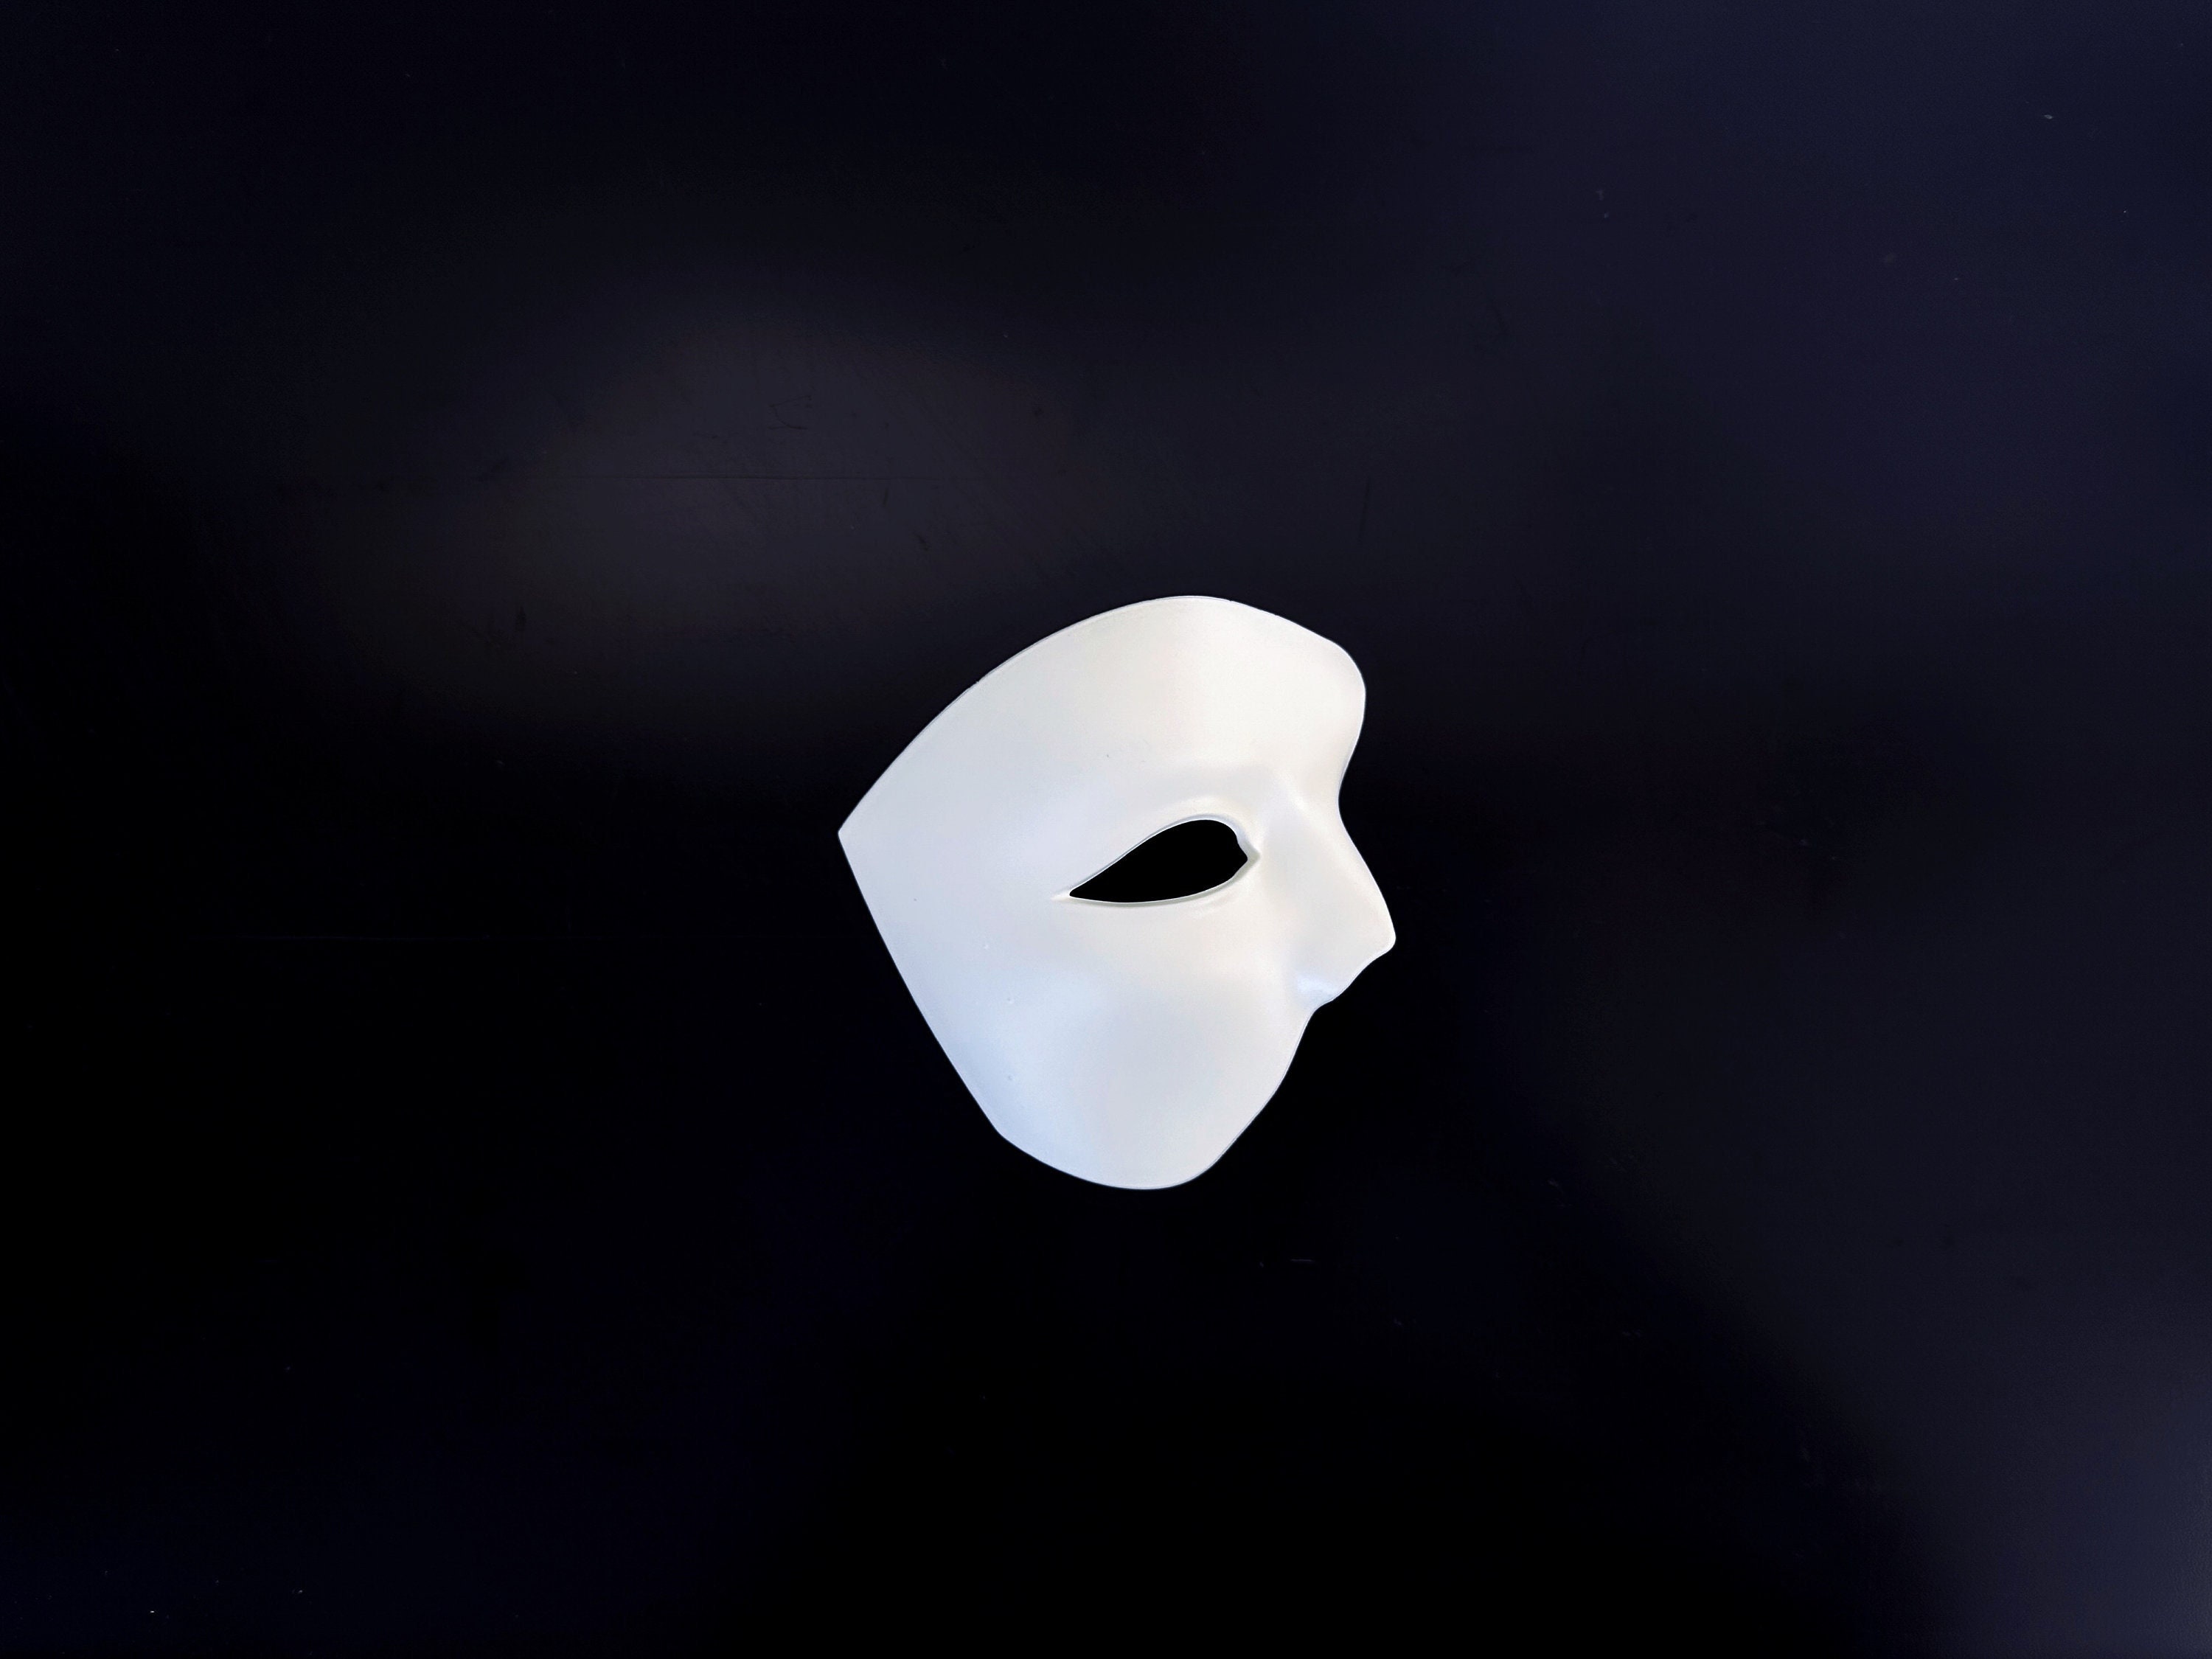 100 Pack White Paper Eye Masks, Plain Masquerade Mask Blank Masks Decorate  for